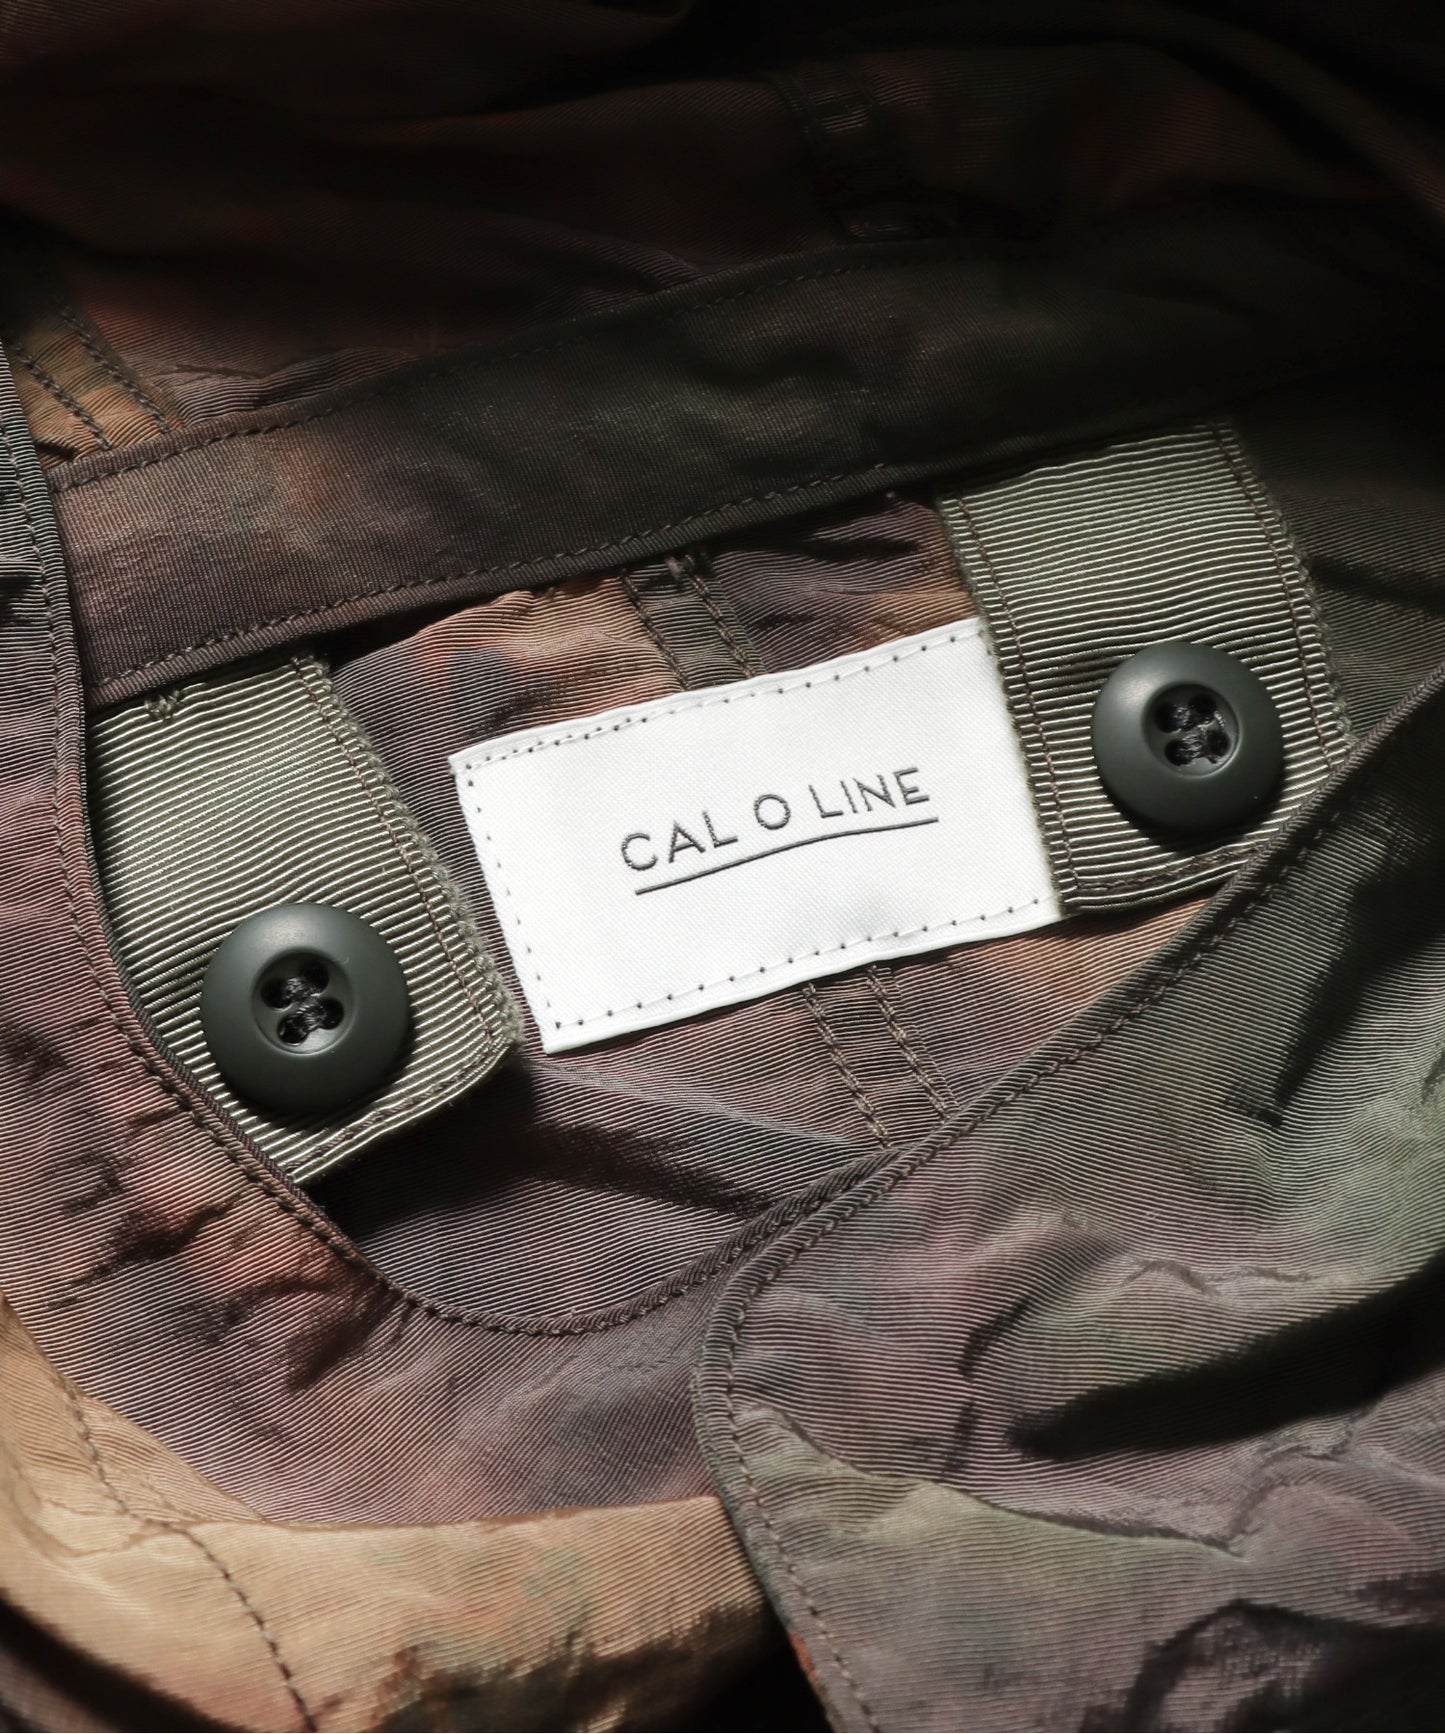 CAL O LINE/キャルオーライン SHELL PARKA M-51